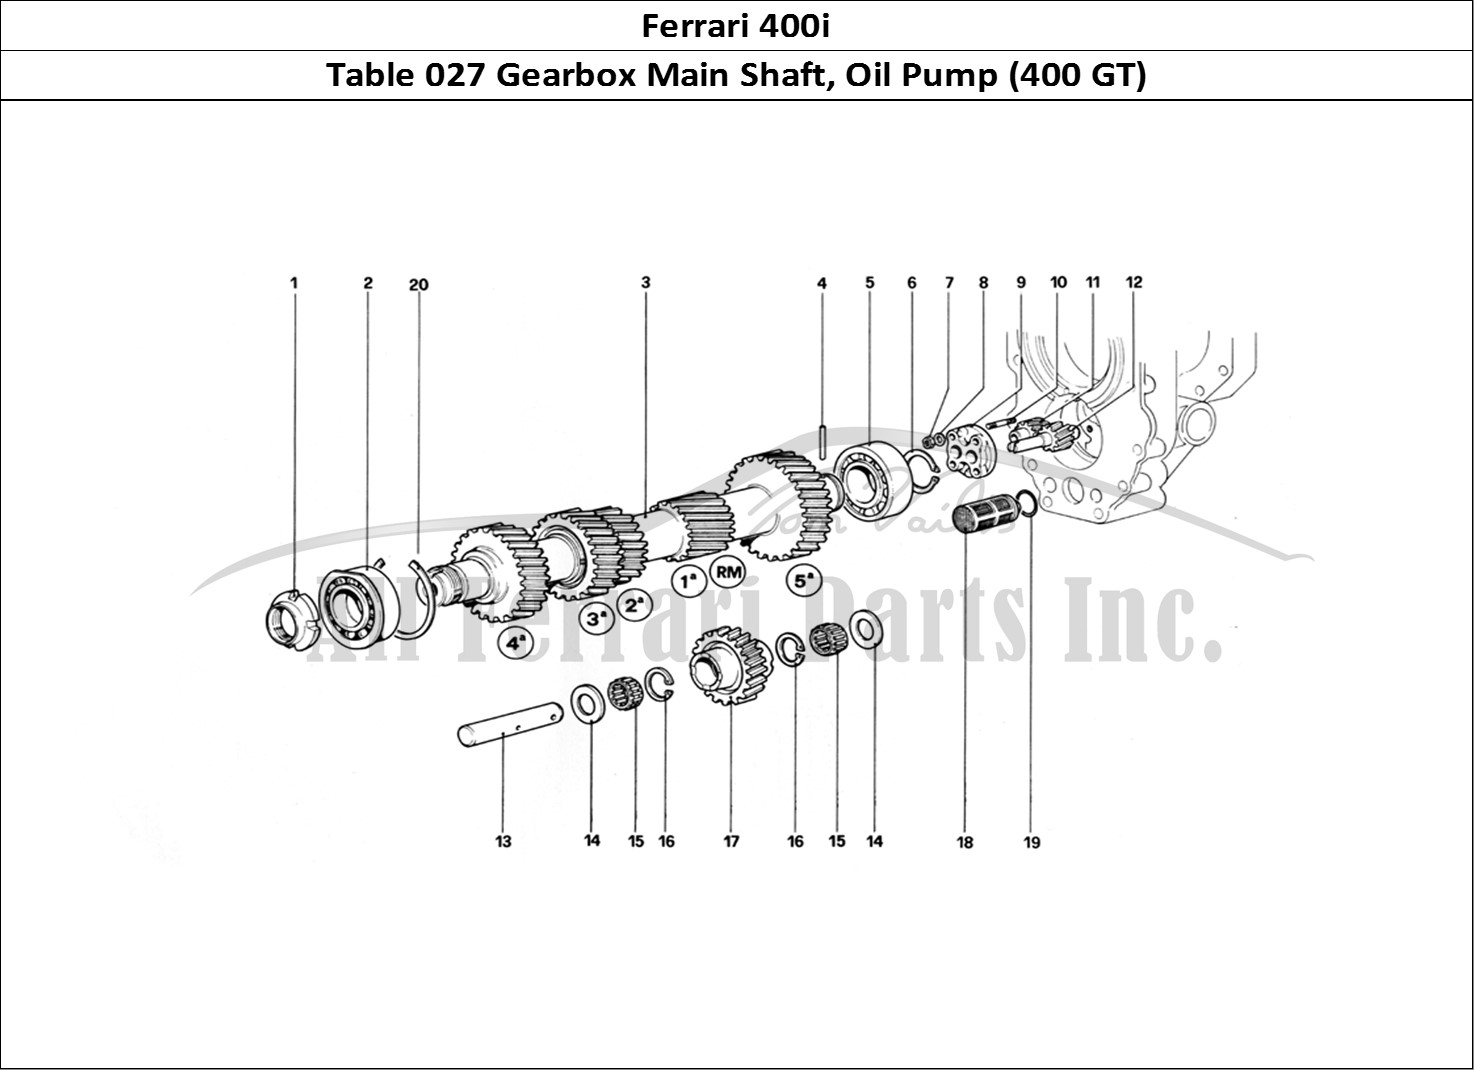 Ferrari Parts Ferrari 400i (1983 Mechanical) Page 027 Main Shaft and Oil Pump (